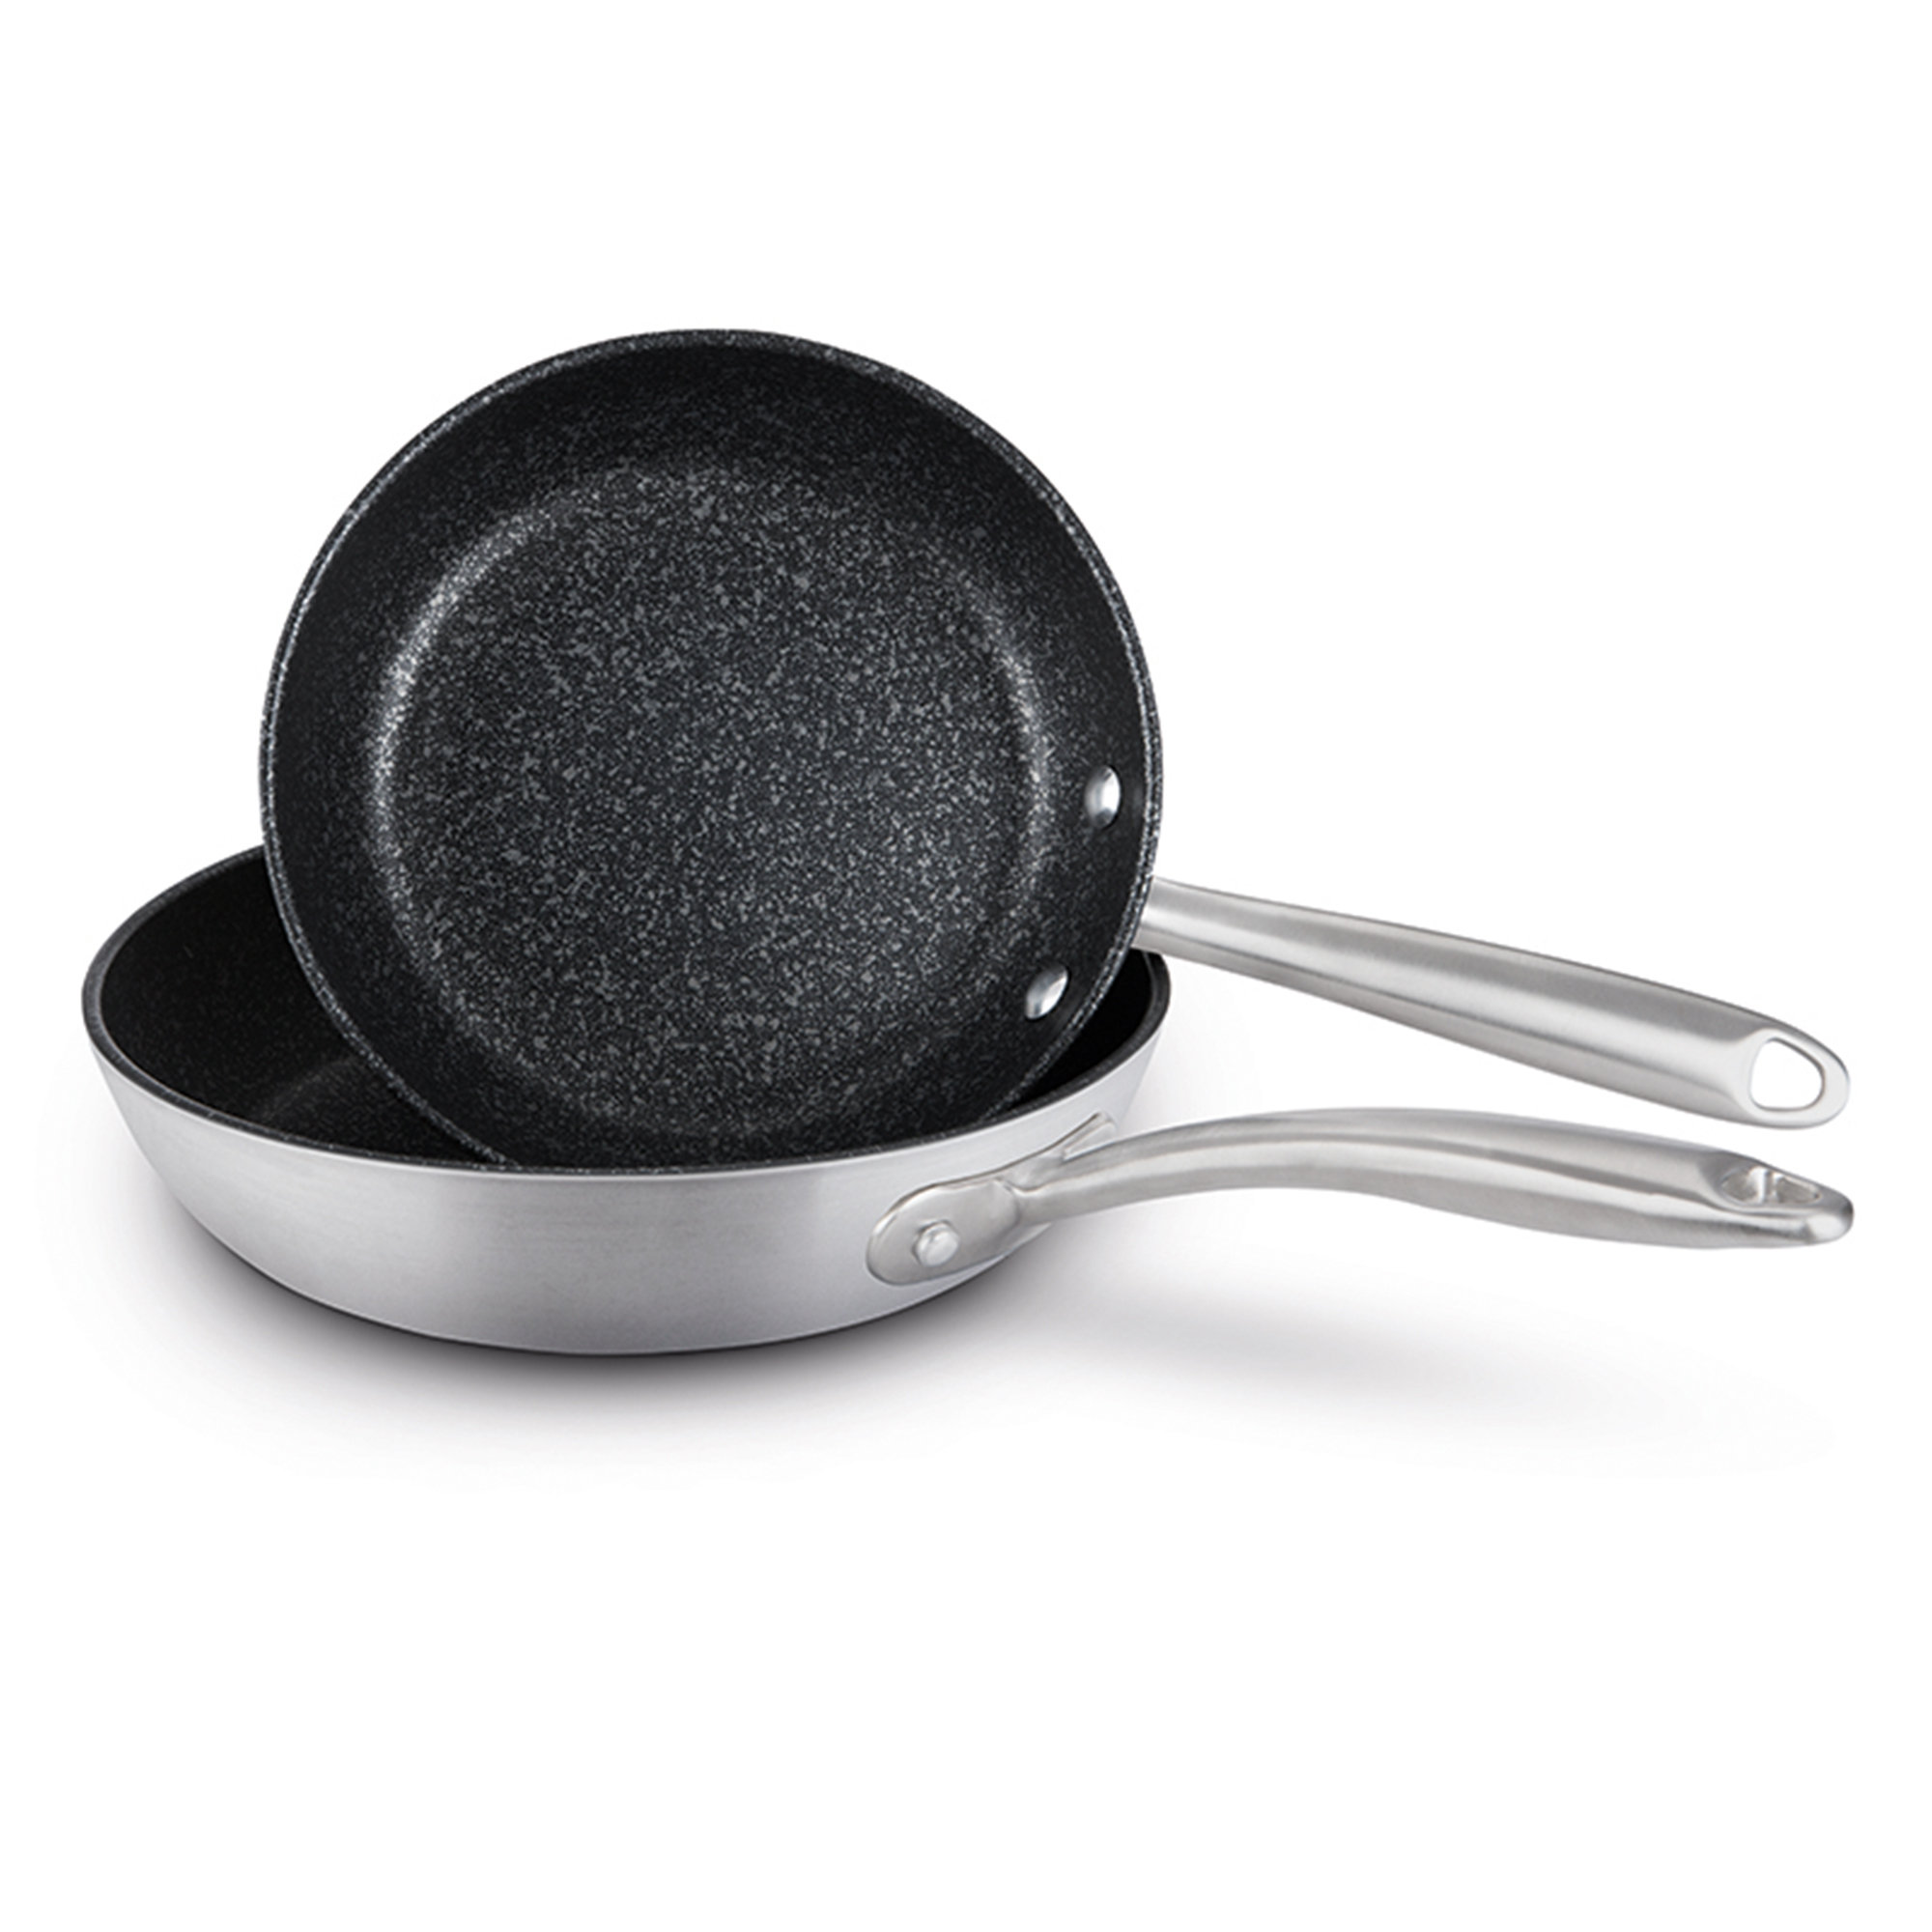 Stainless Steel 25cm Medium Frying Pan